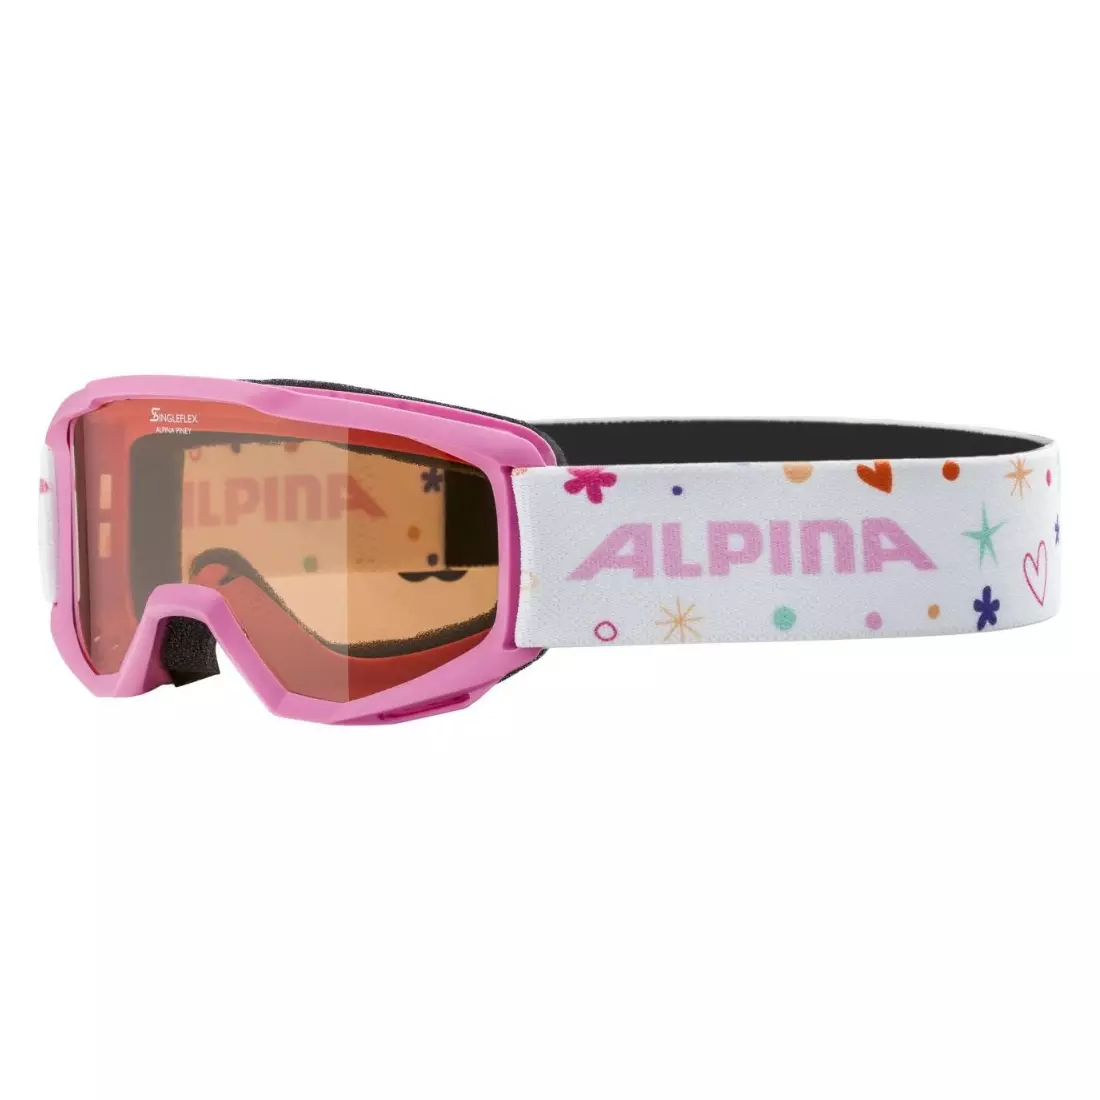 Ski / snowboard goggles ALPINA JUNIOR PINEY ROSE-ROSE A7268458